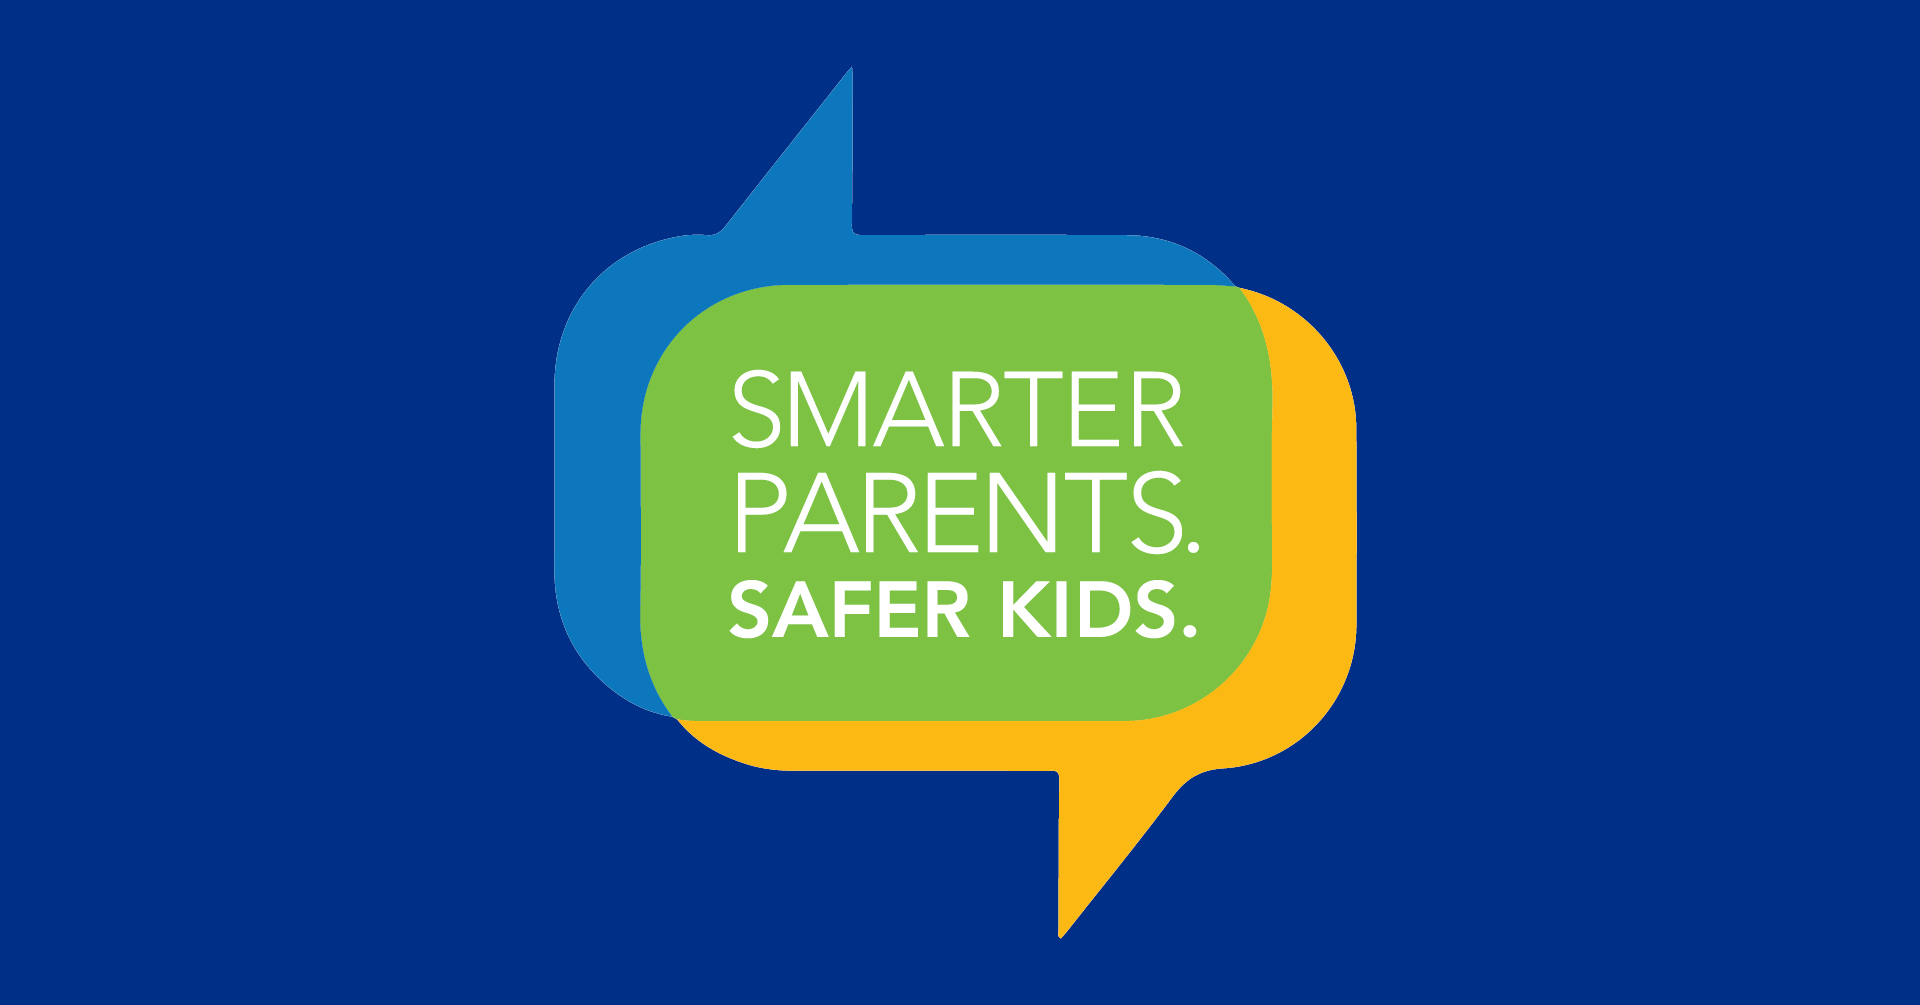 Welcome to Safer, Smarter Kids!